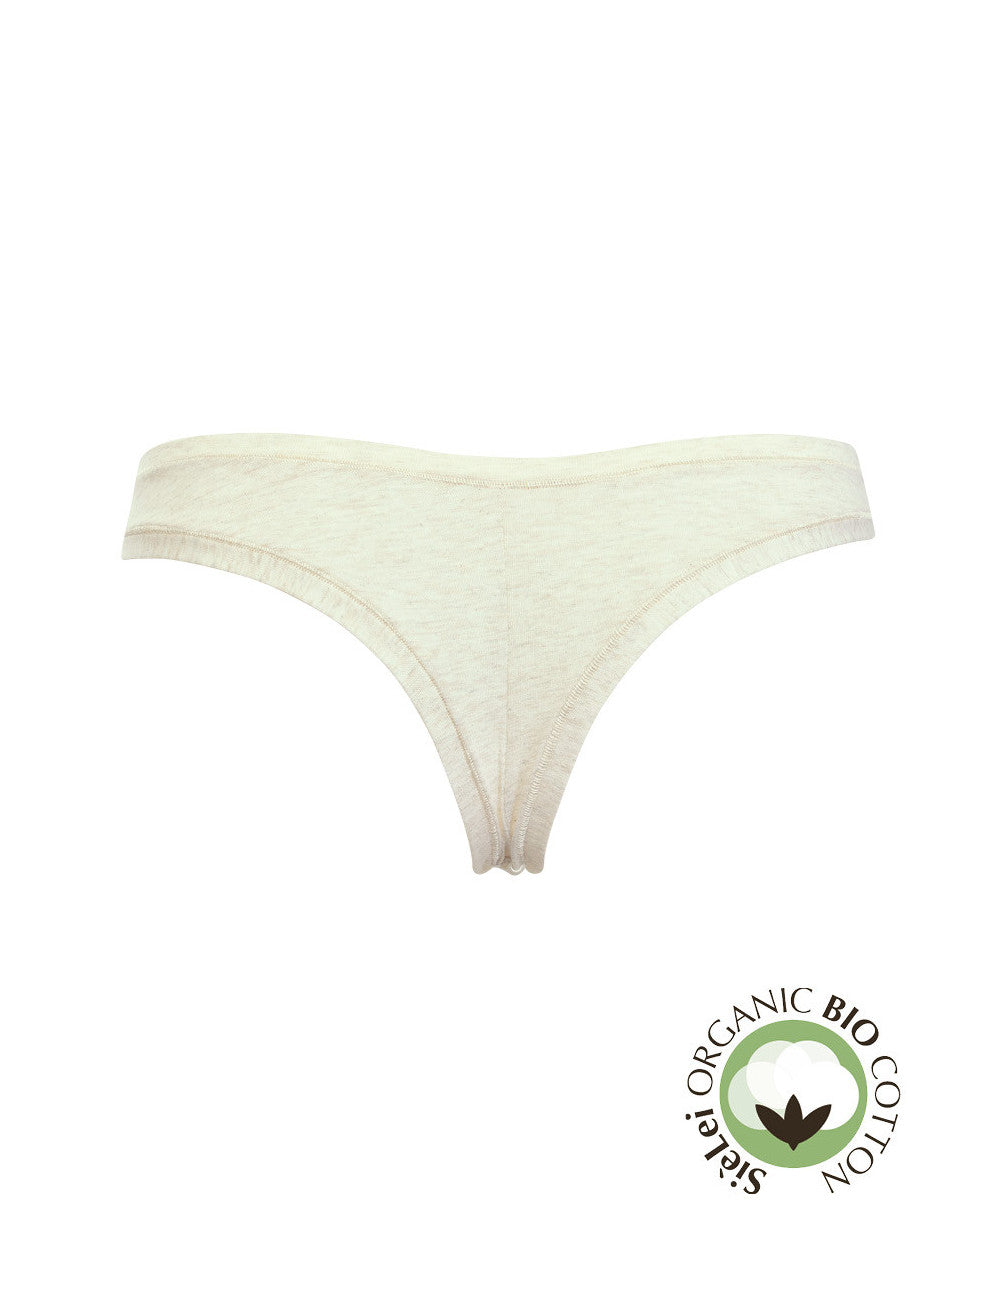 Linen panties, Organic underwear - Crealandia